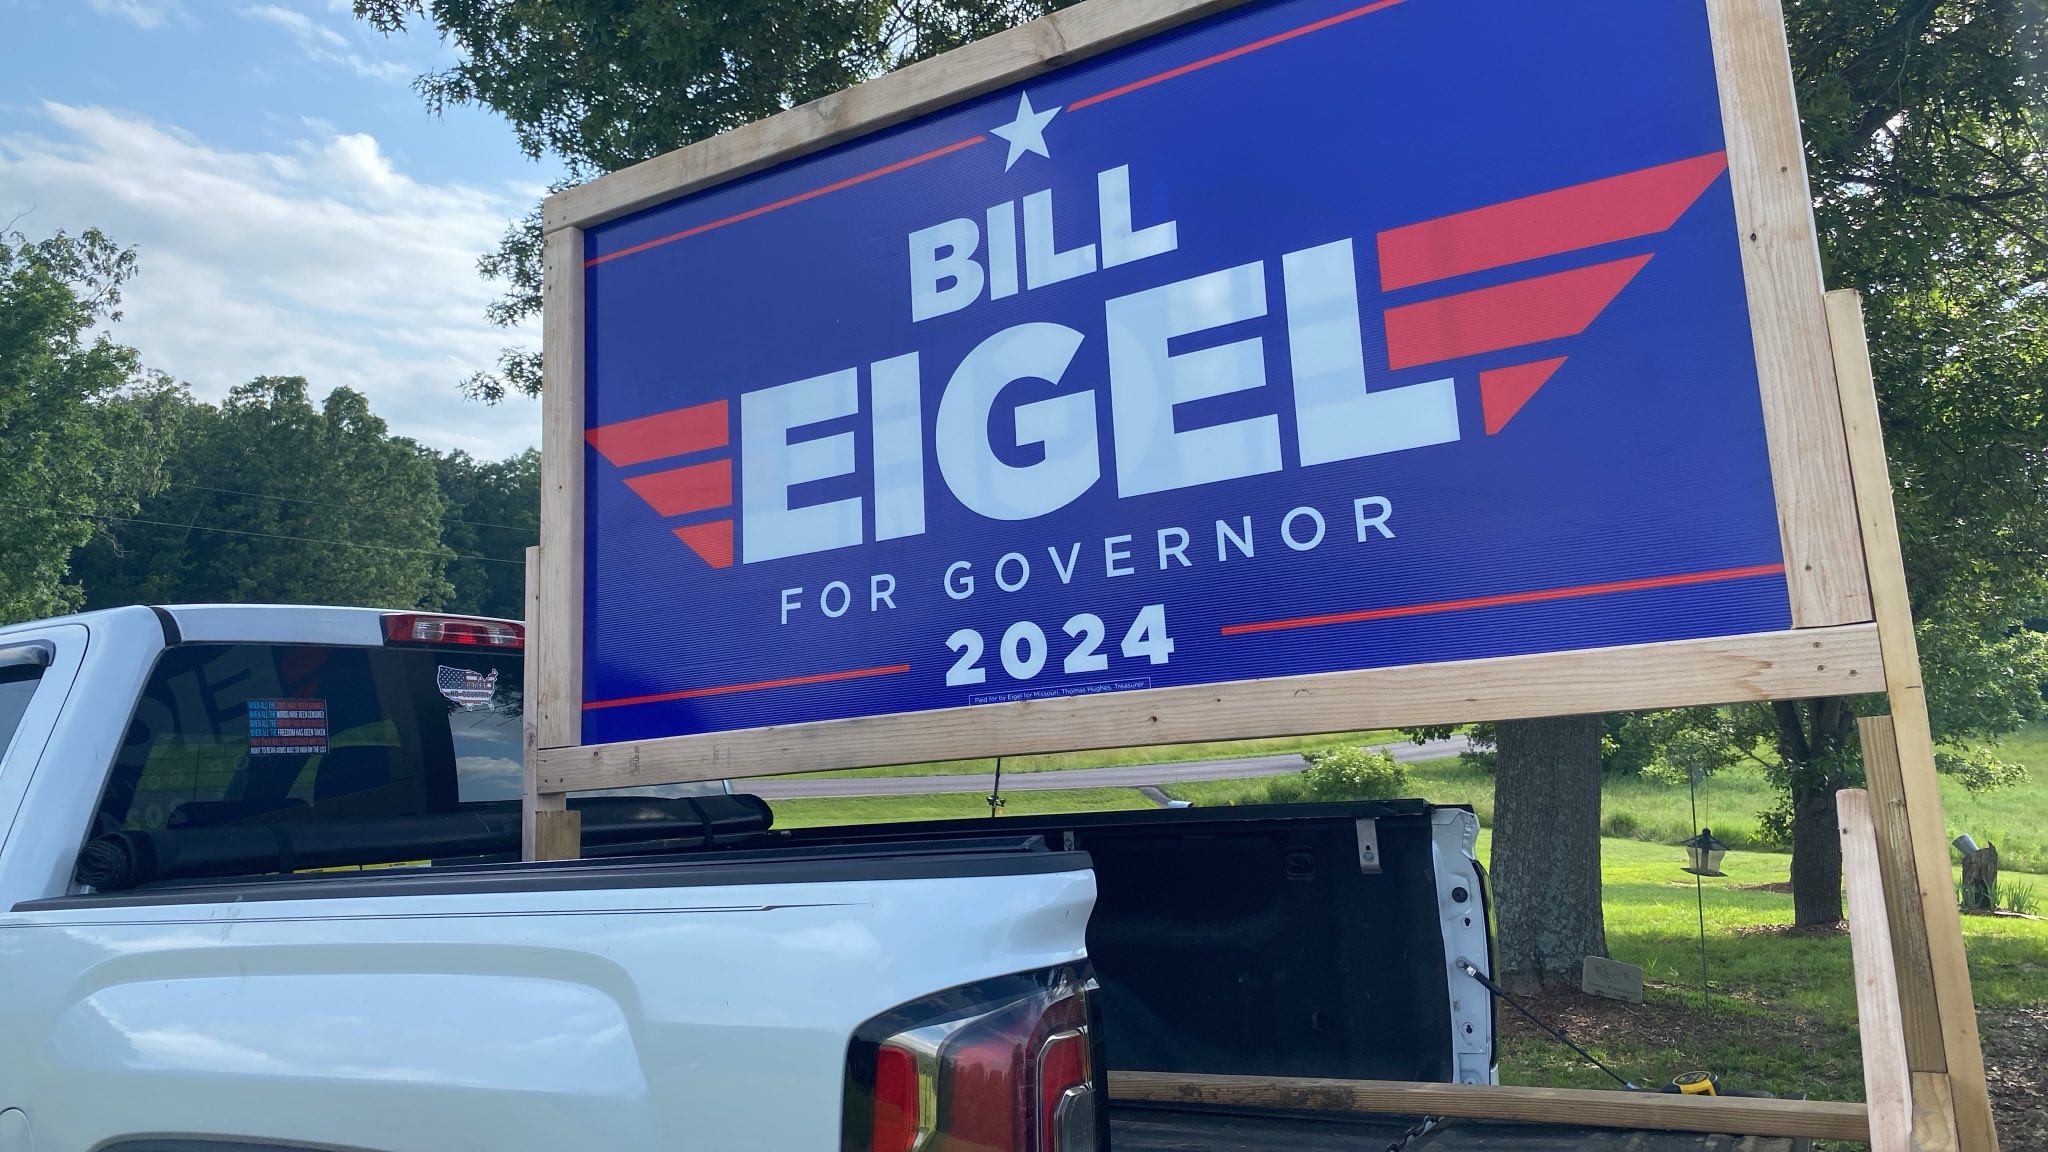 Bill Eigel for Governor